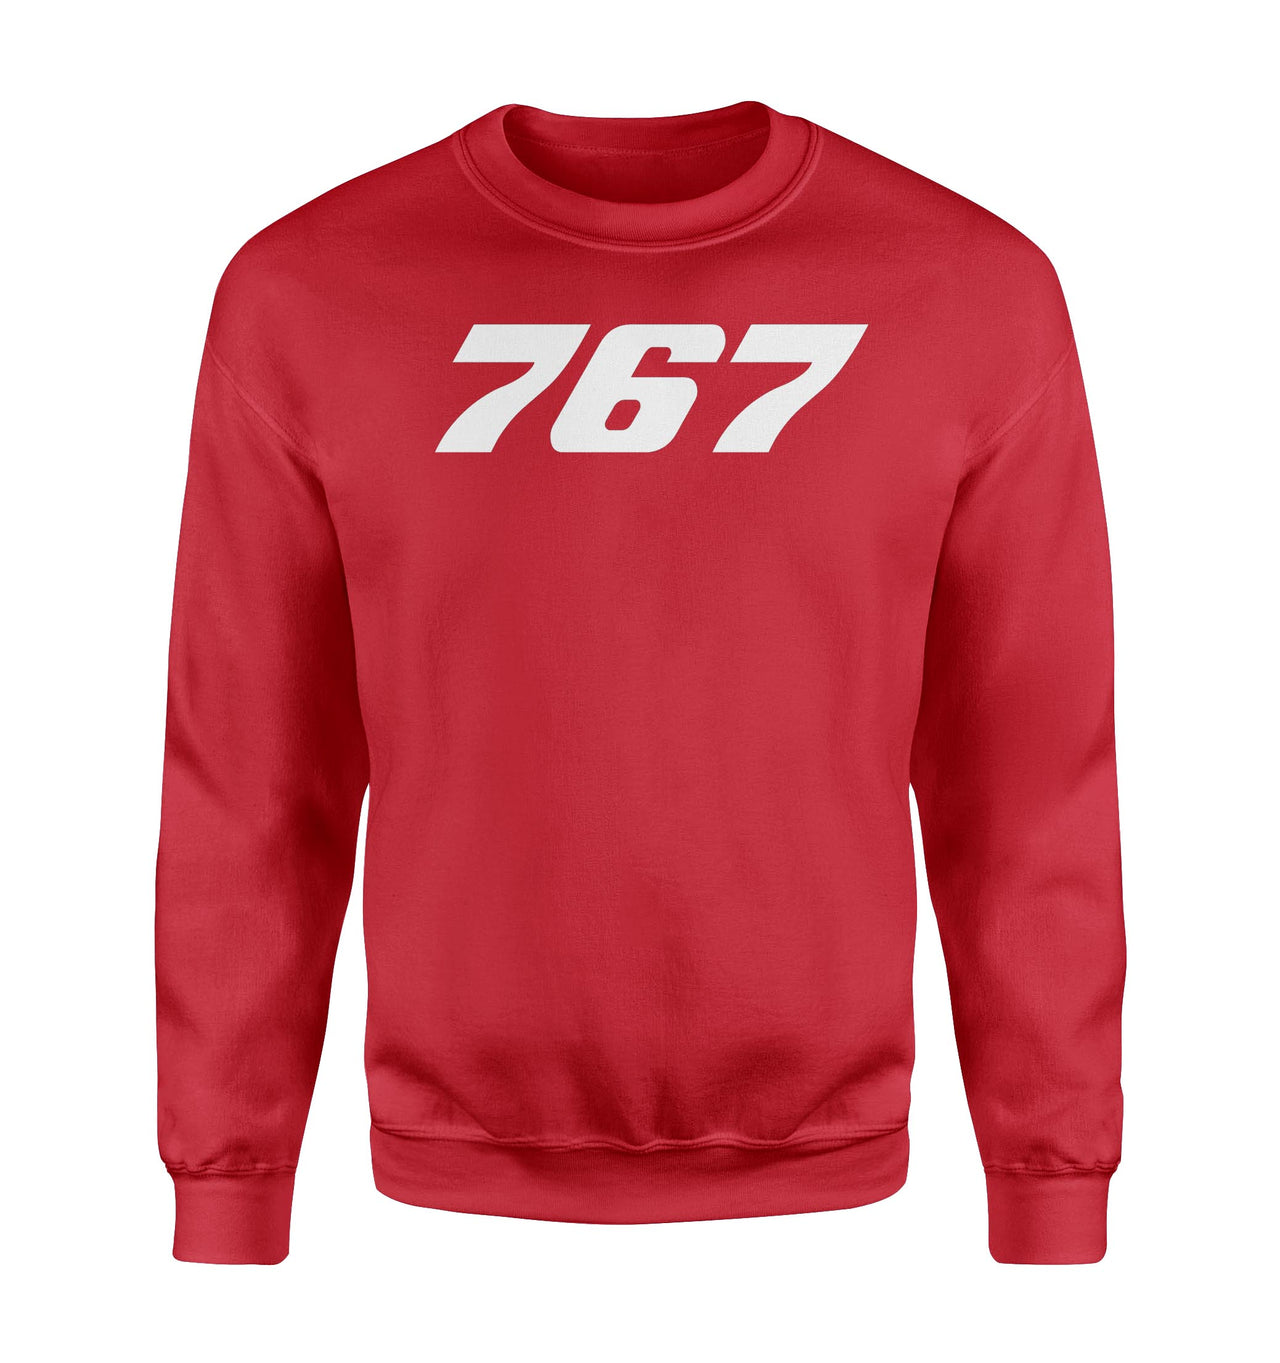 767 Flat Text Designed Sweatshirts